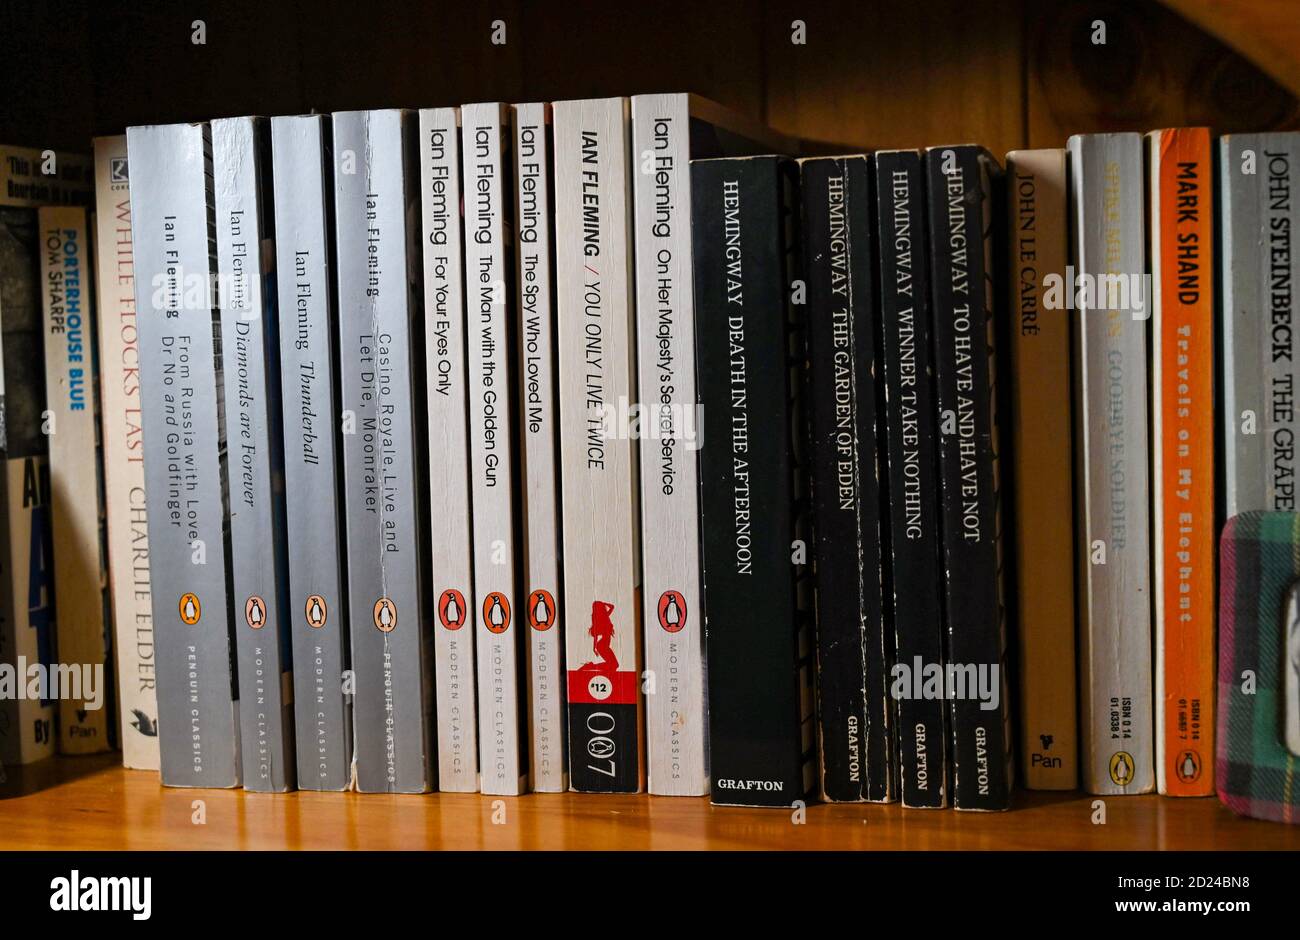 James Bond spy novels written by author Ian Fleming and Ernest Hemingway books on home bookshelf Stock Photo